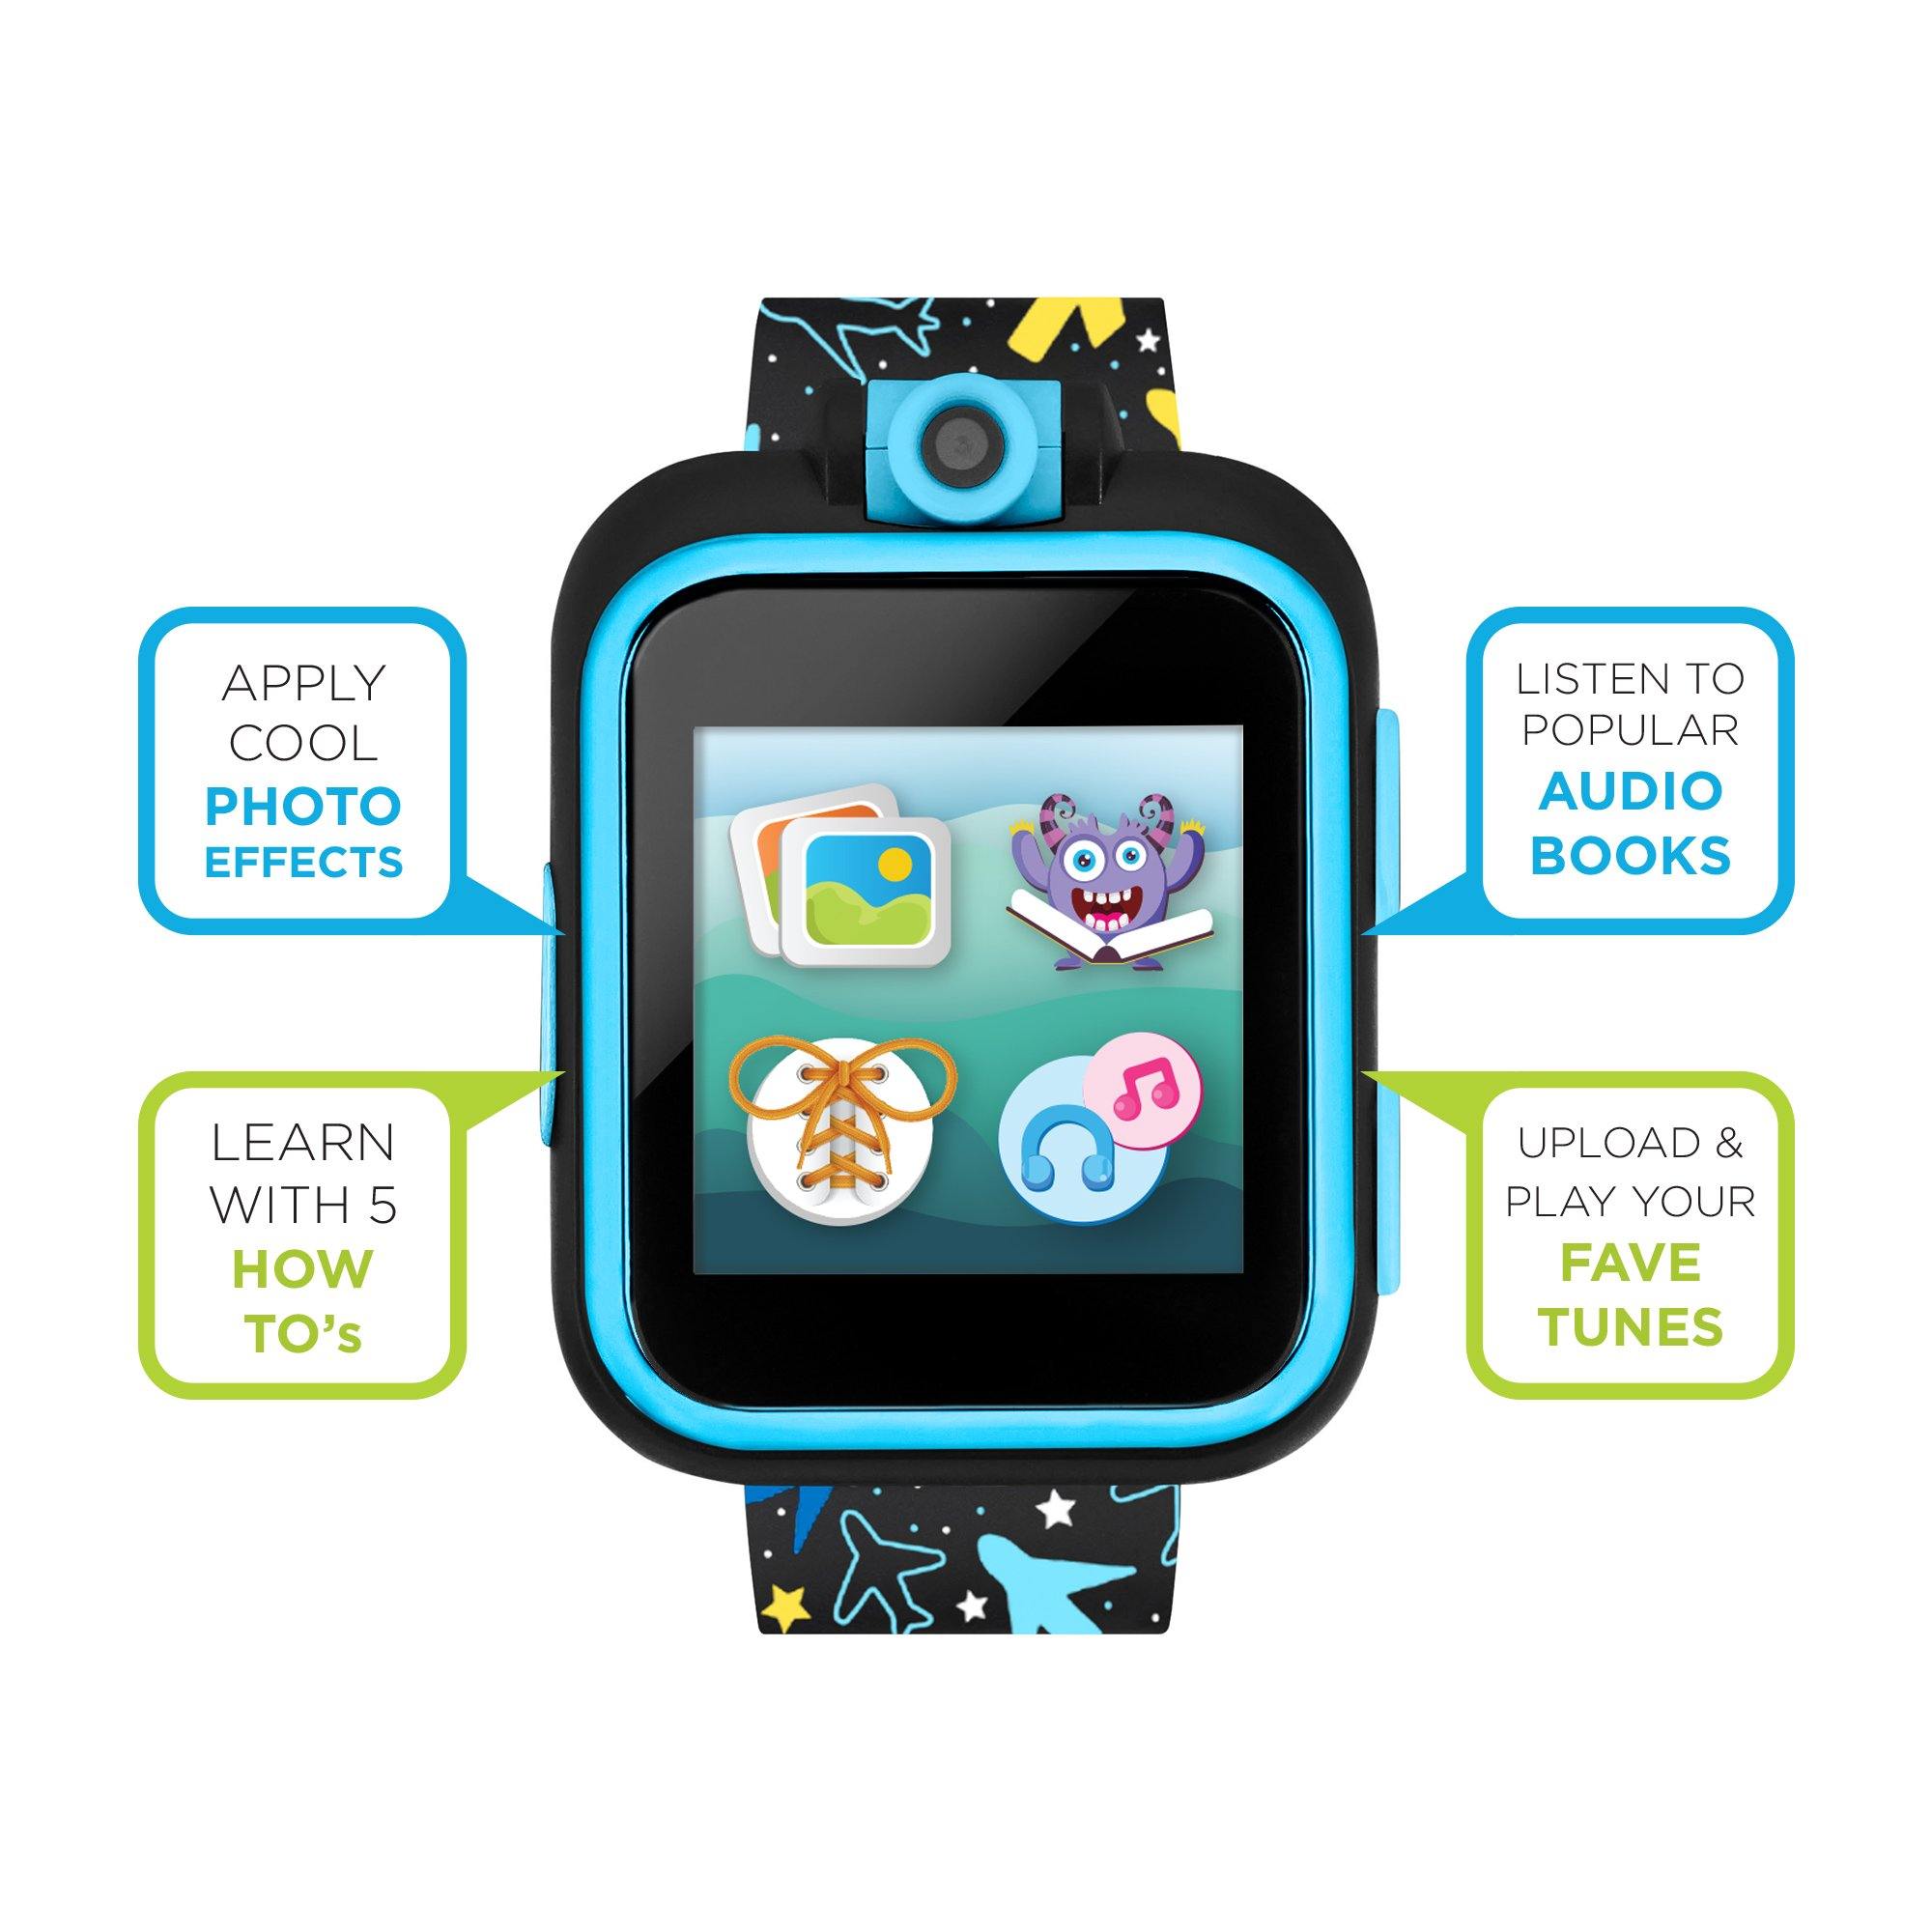 PlayZoom 2 Kids Smartwatch: Airplane & Star Print affordable smart watch